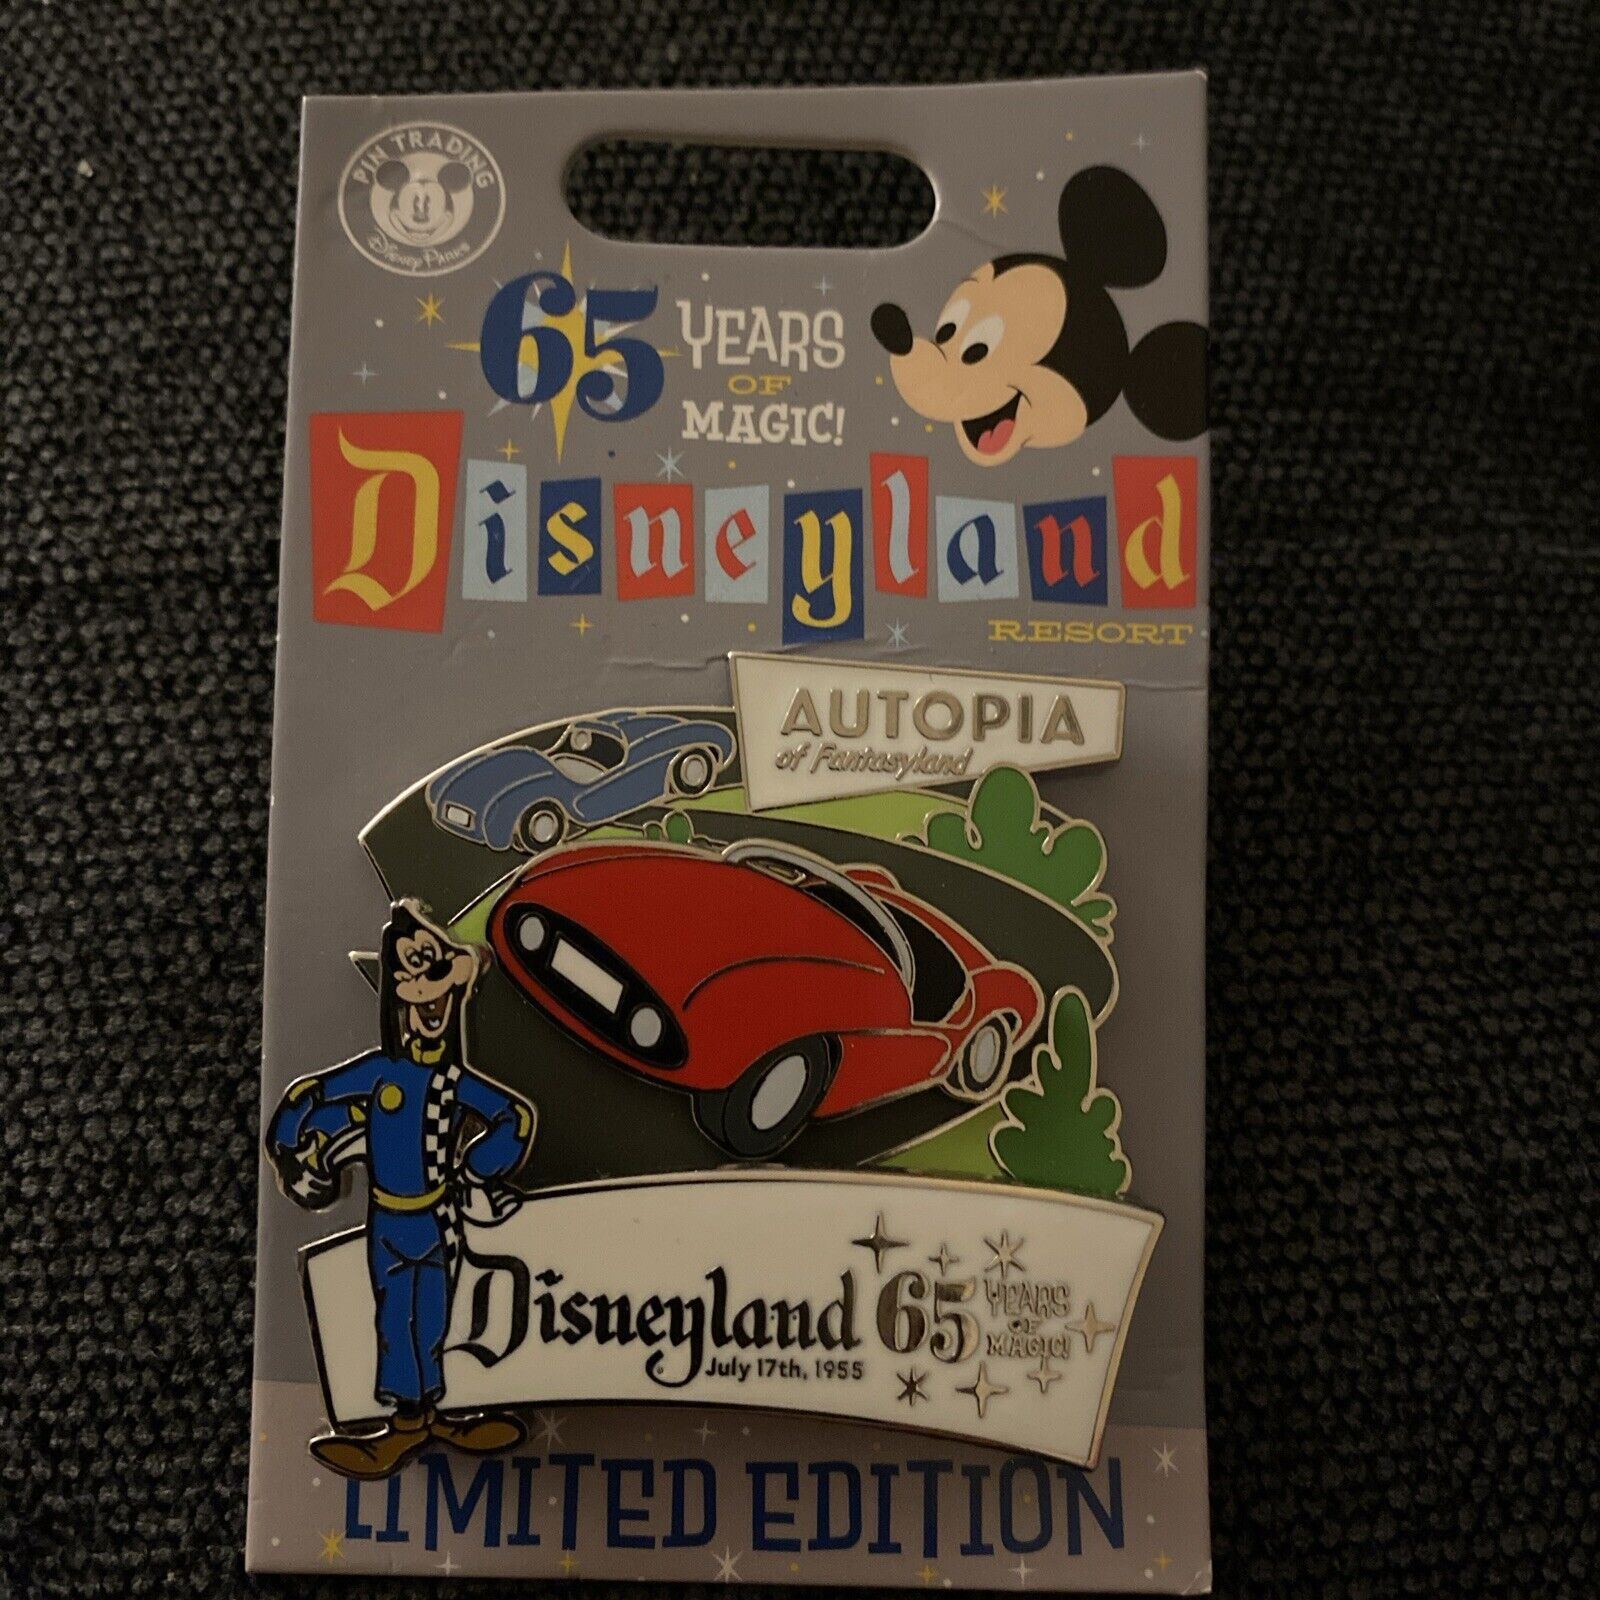 Disneyland 65 Years of Magic Autopia of Fantasyland Pin Limited Edition